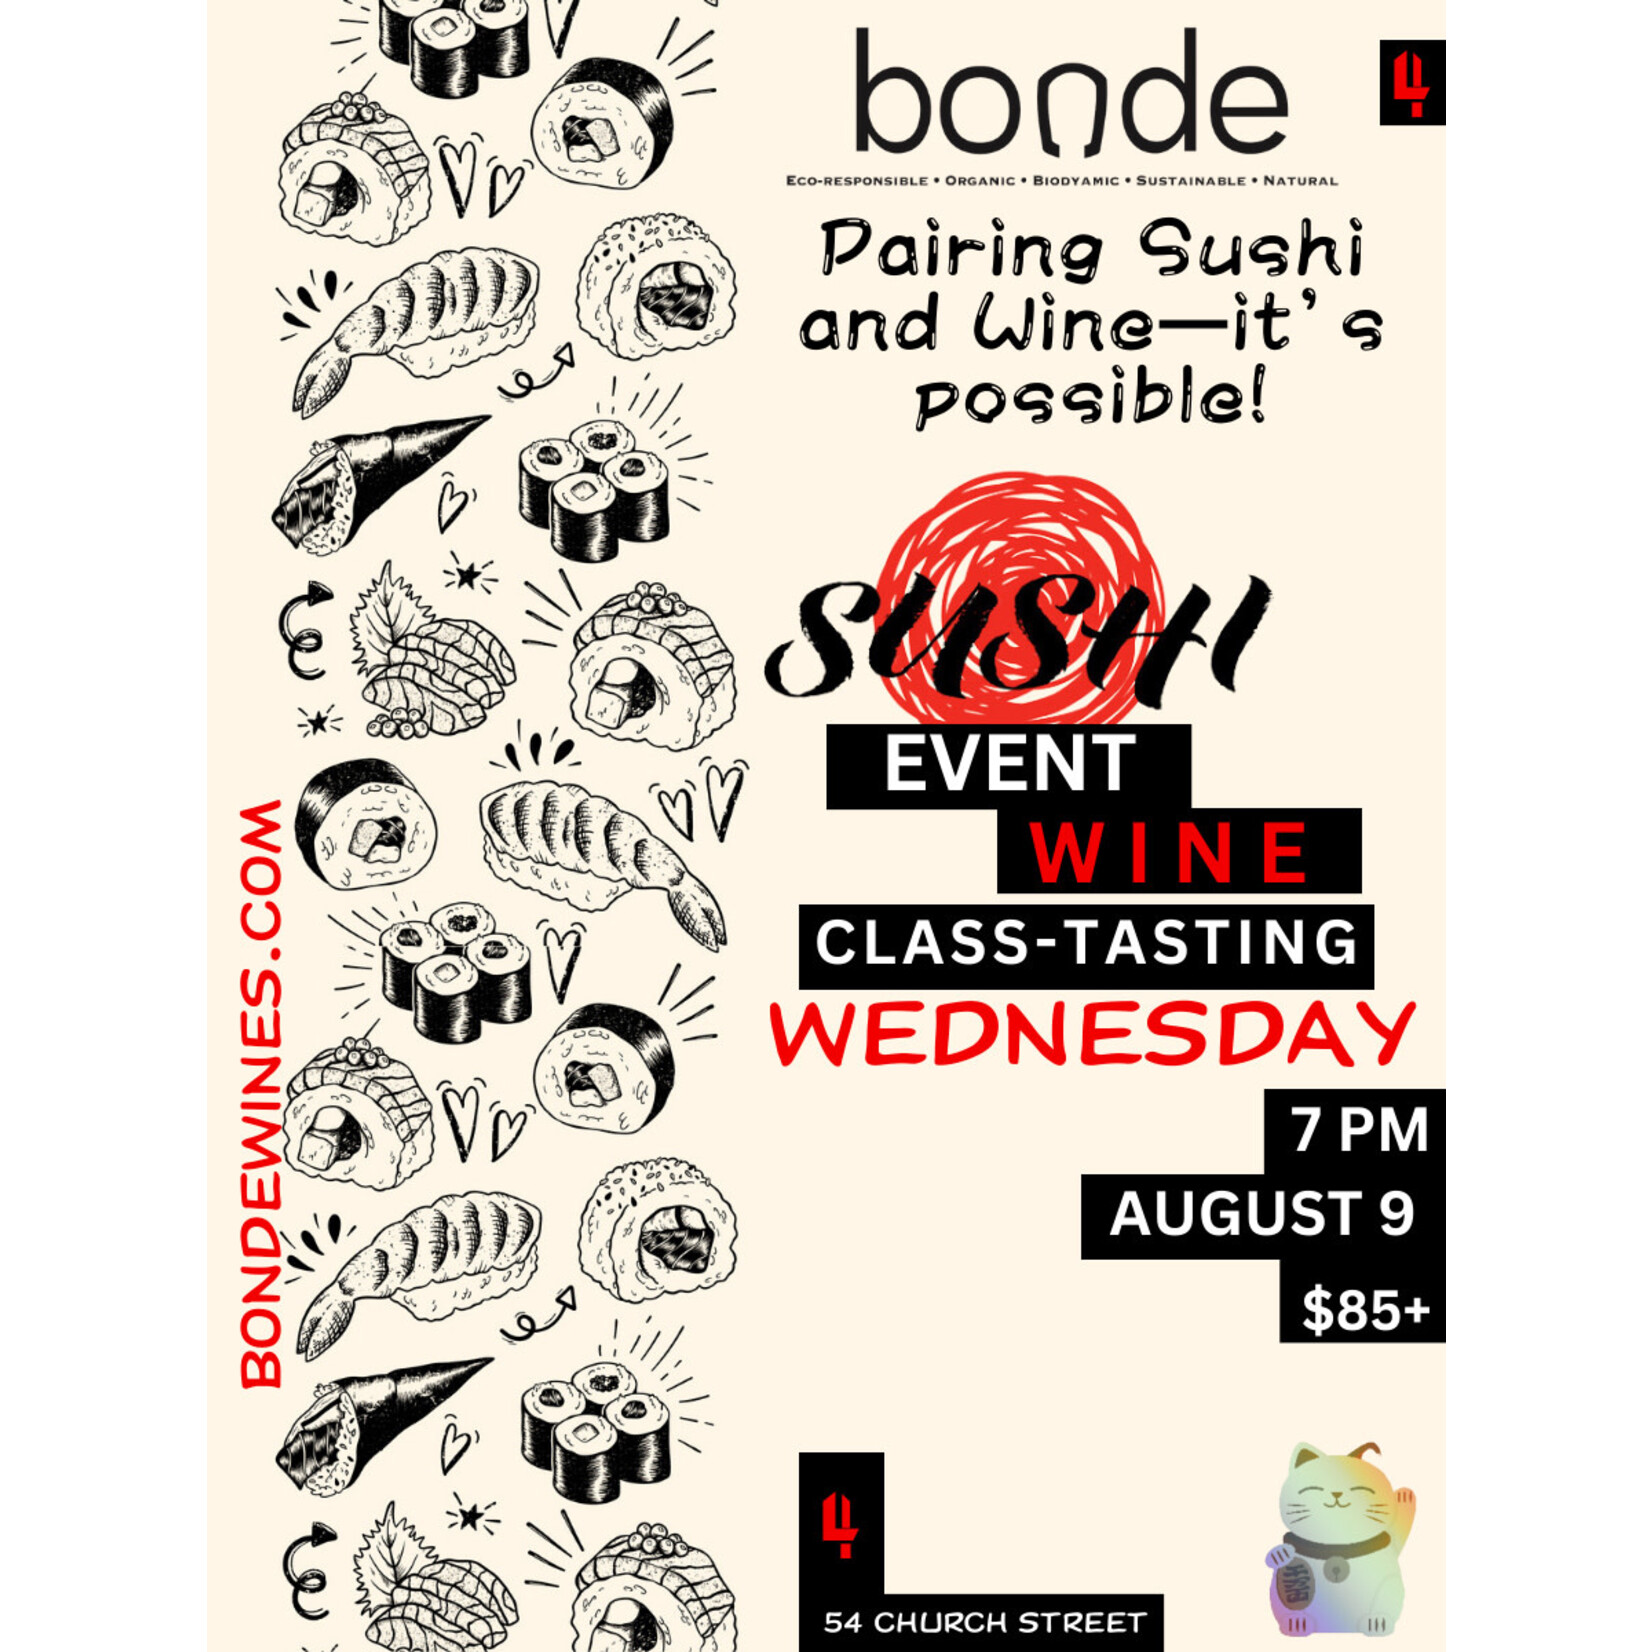 Sushi & Wine - Wine Tasting & Class - Wednesday August 9, 7PM